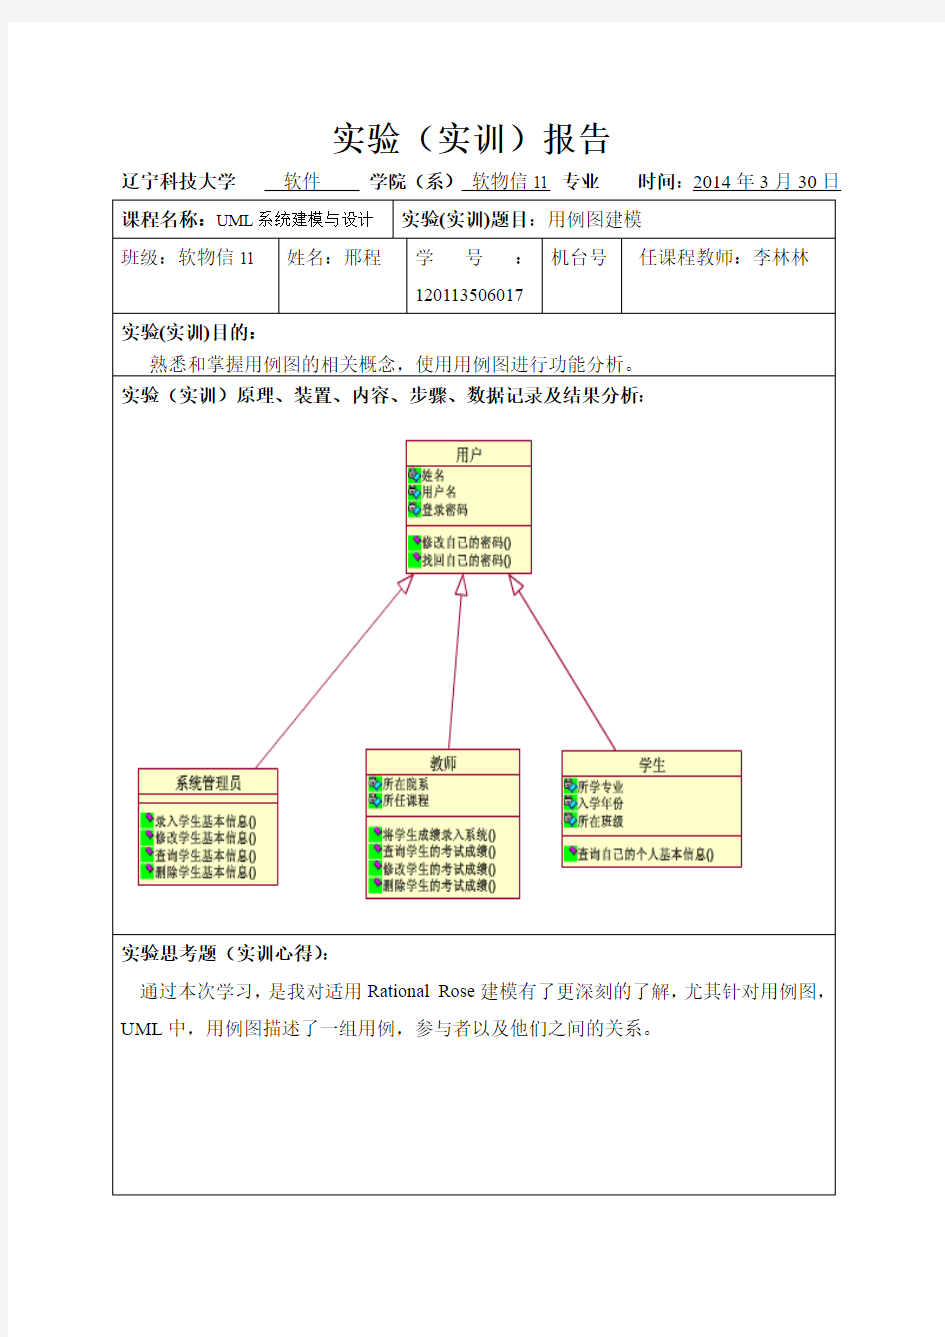 UML系统建模与设计实验报告 (类图,对象图)